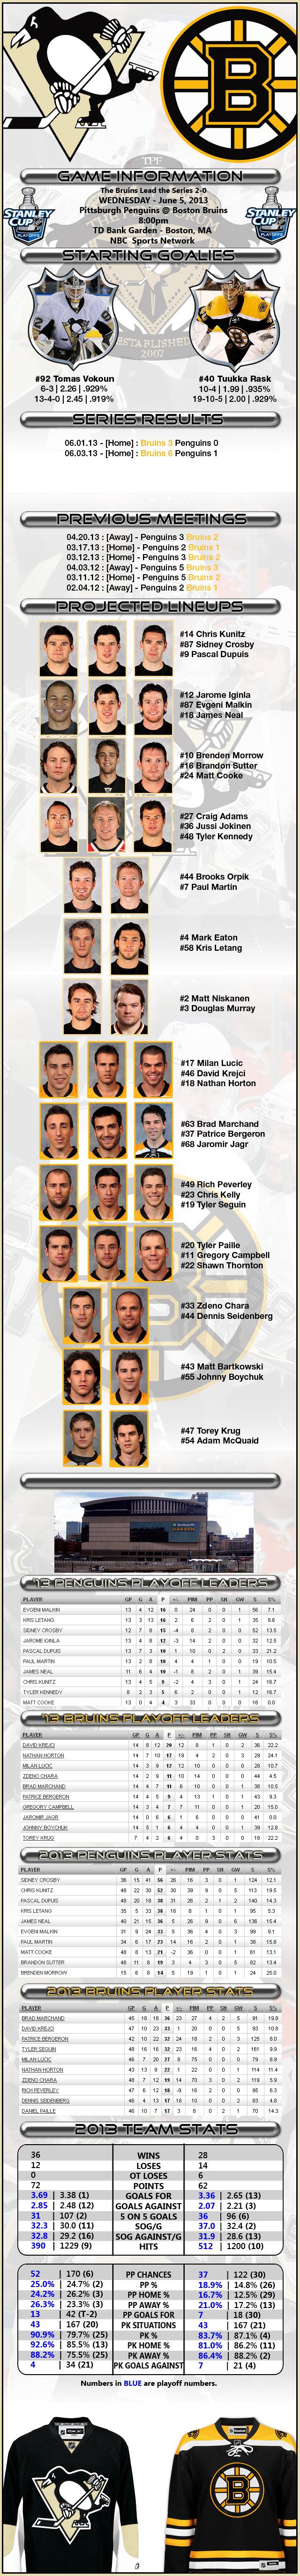 PLAYOFFS R3G3 : Penguins @ Bruins : 06.05.13 : Live Game Thread!